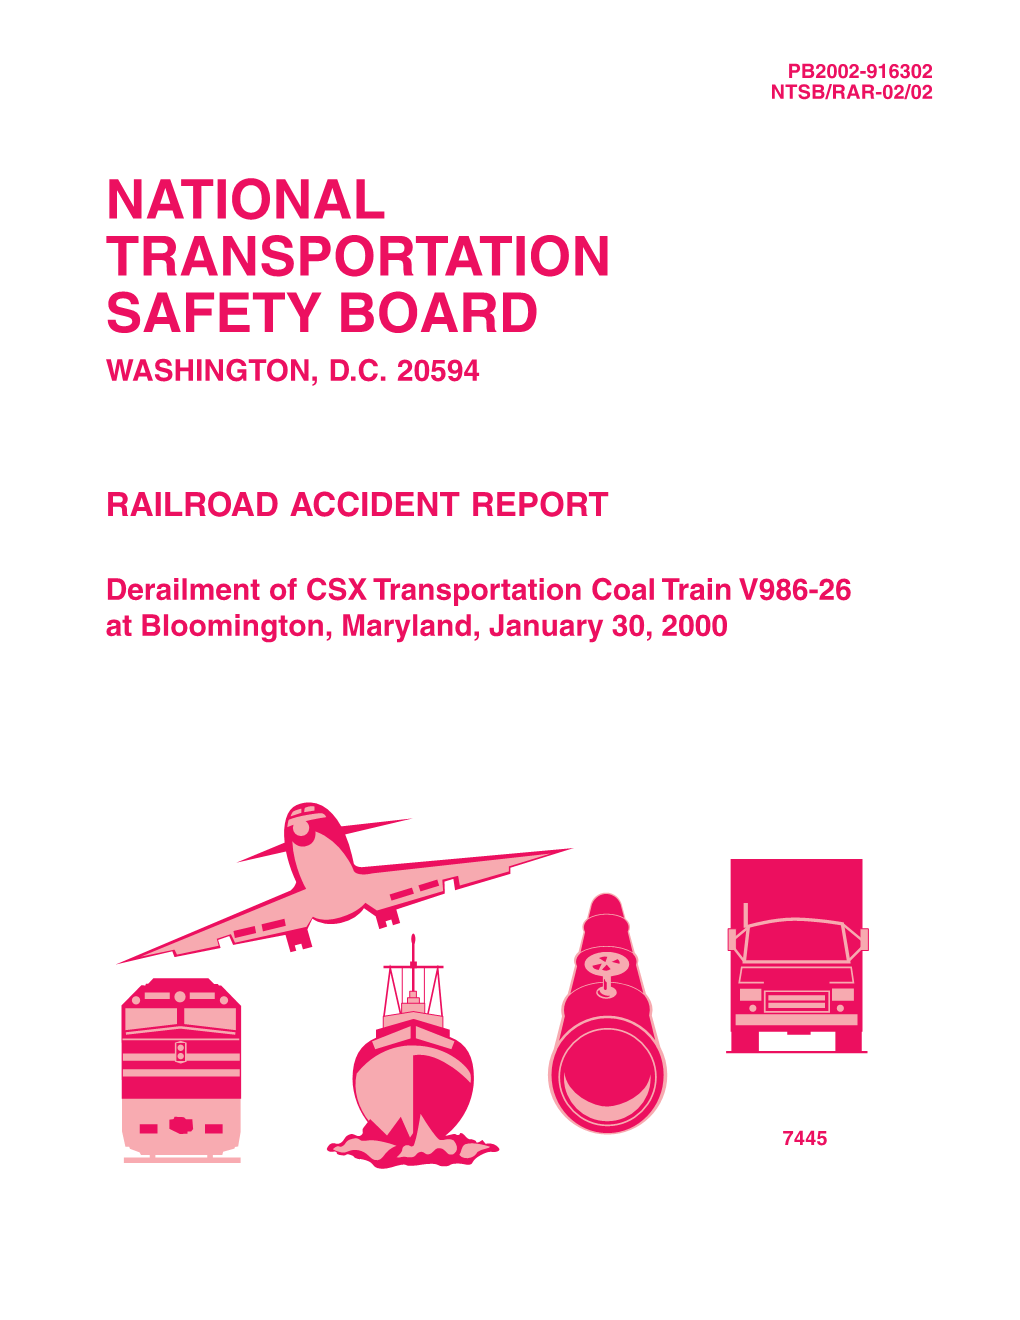 Derailment of CSX Transportation Coal Train V986-26 at Bloomington, Maryland, January 30, 2000